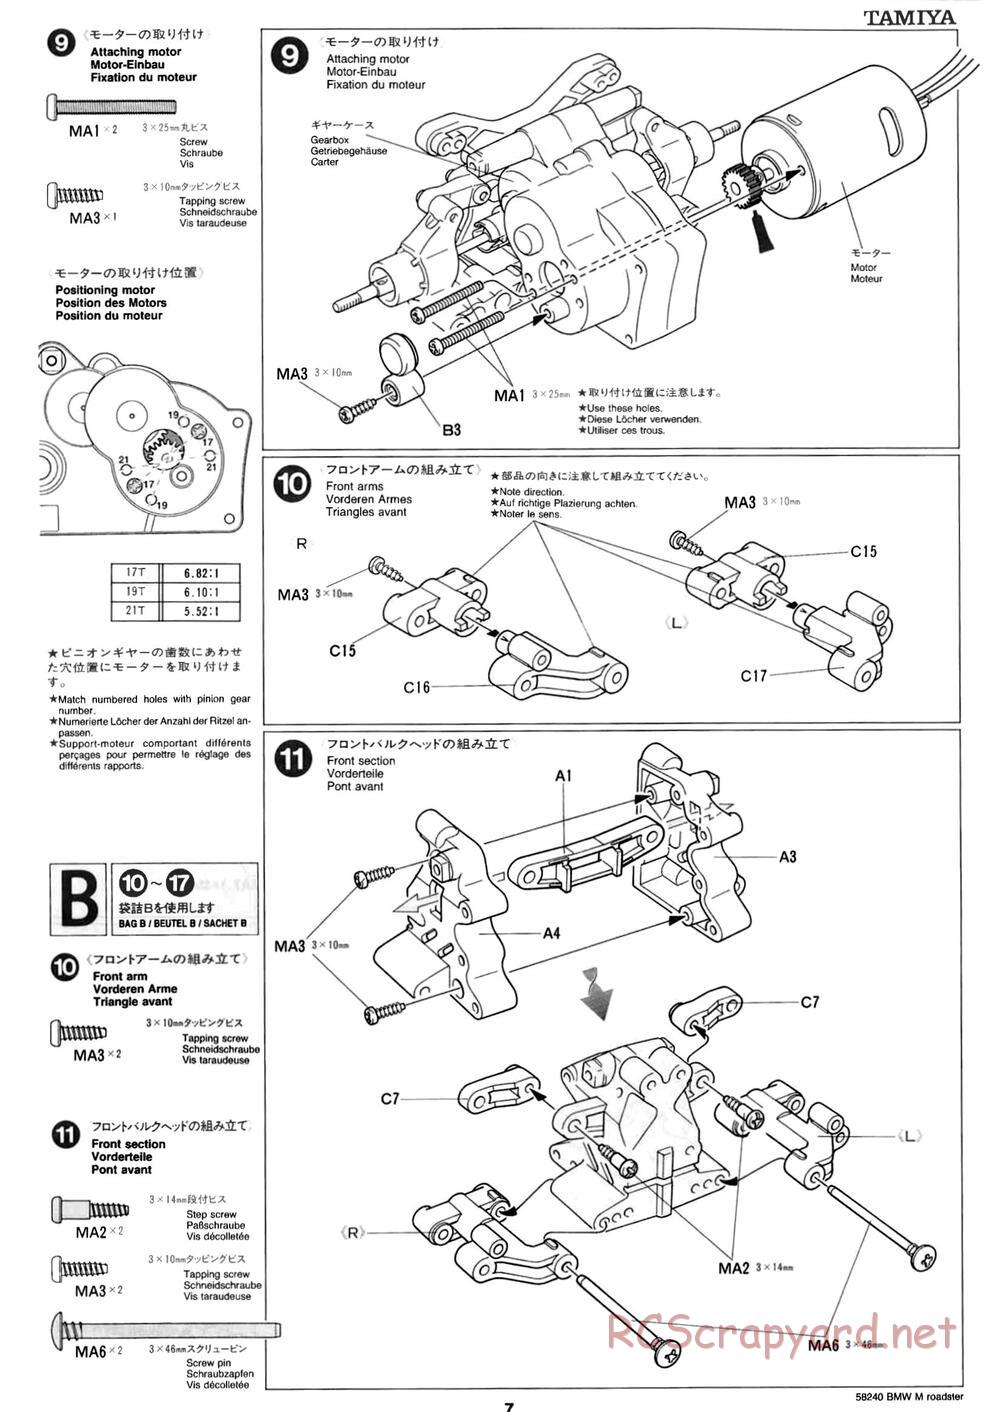 Tamiya - BMW M Roadster - M04L Chassis - Manual - Page 7